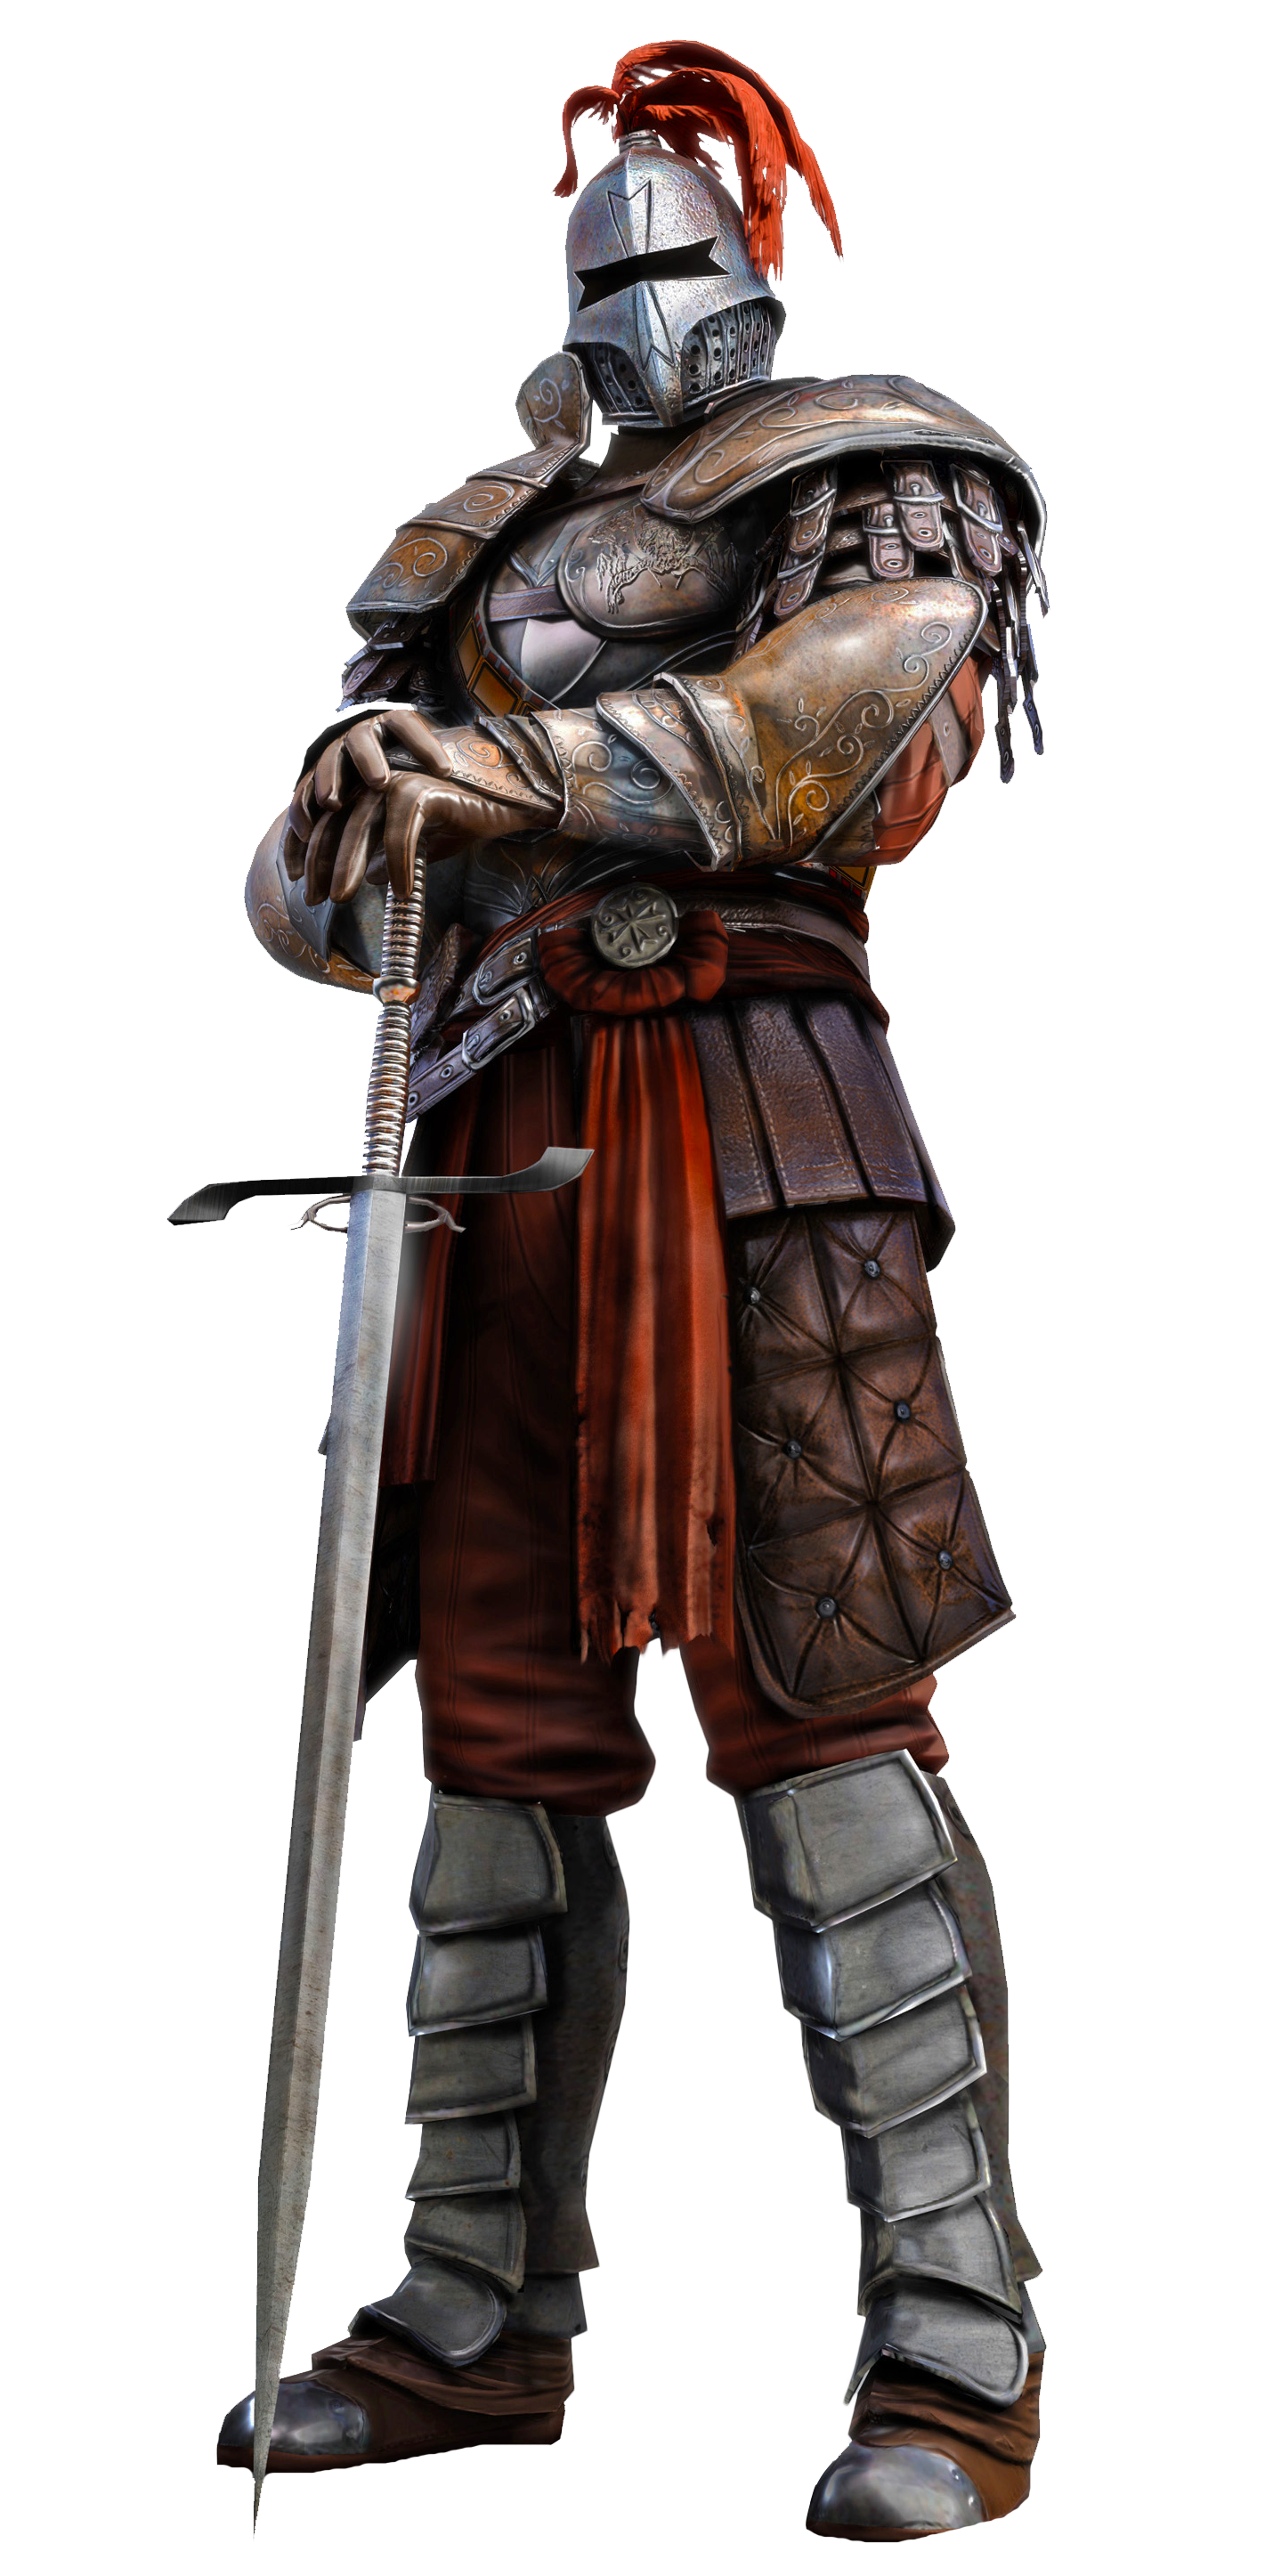 Knight | Assassin's Creed Wiki | FANDOM powered by Wikia